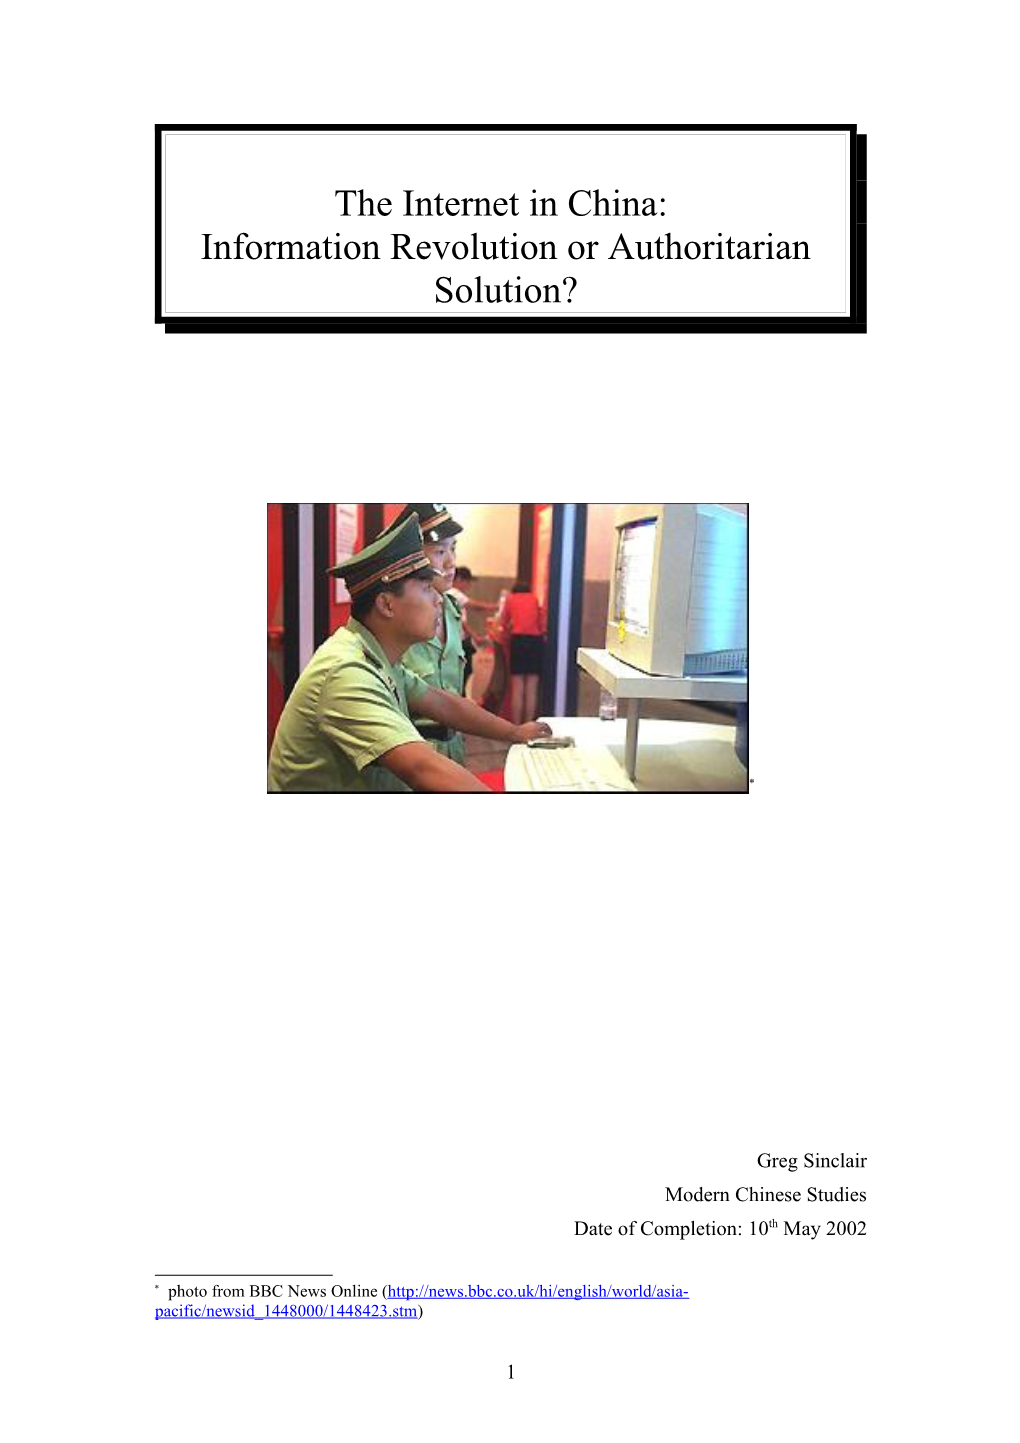 Information Revolution Or Authoritarian Solution?